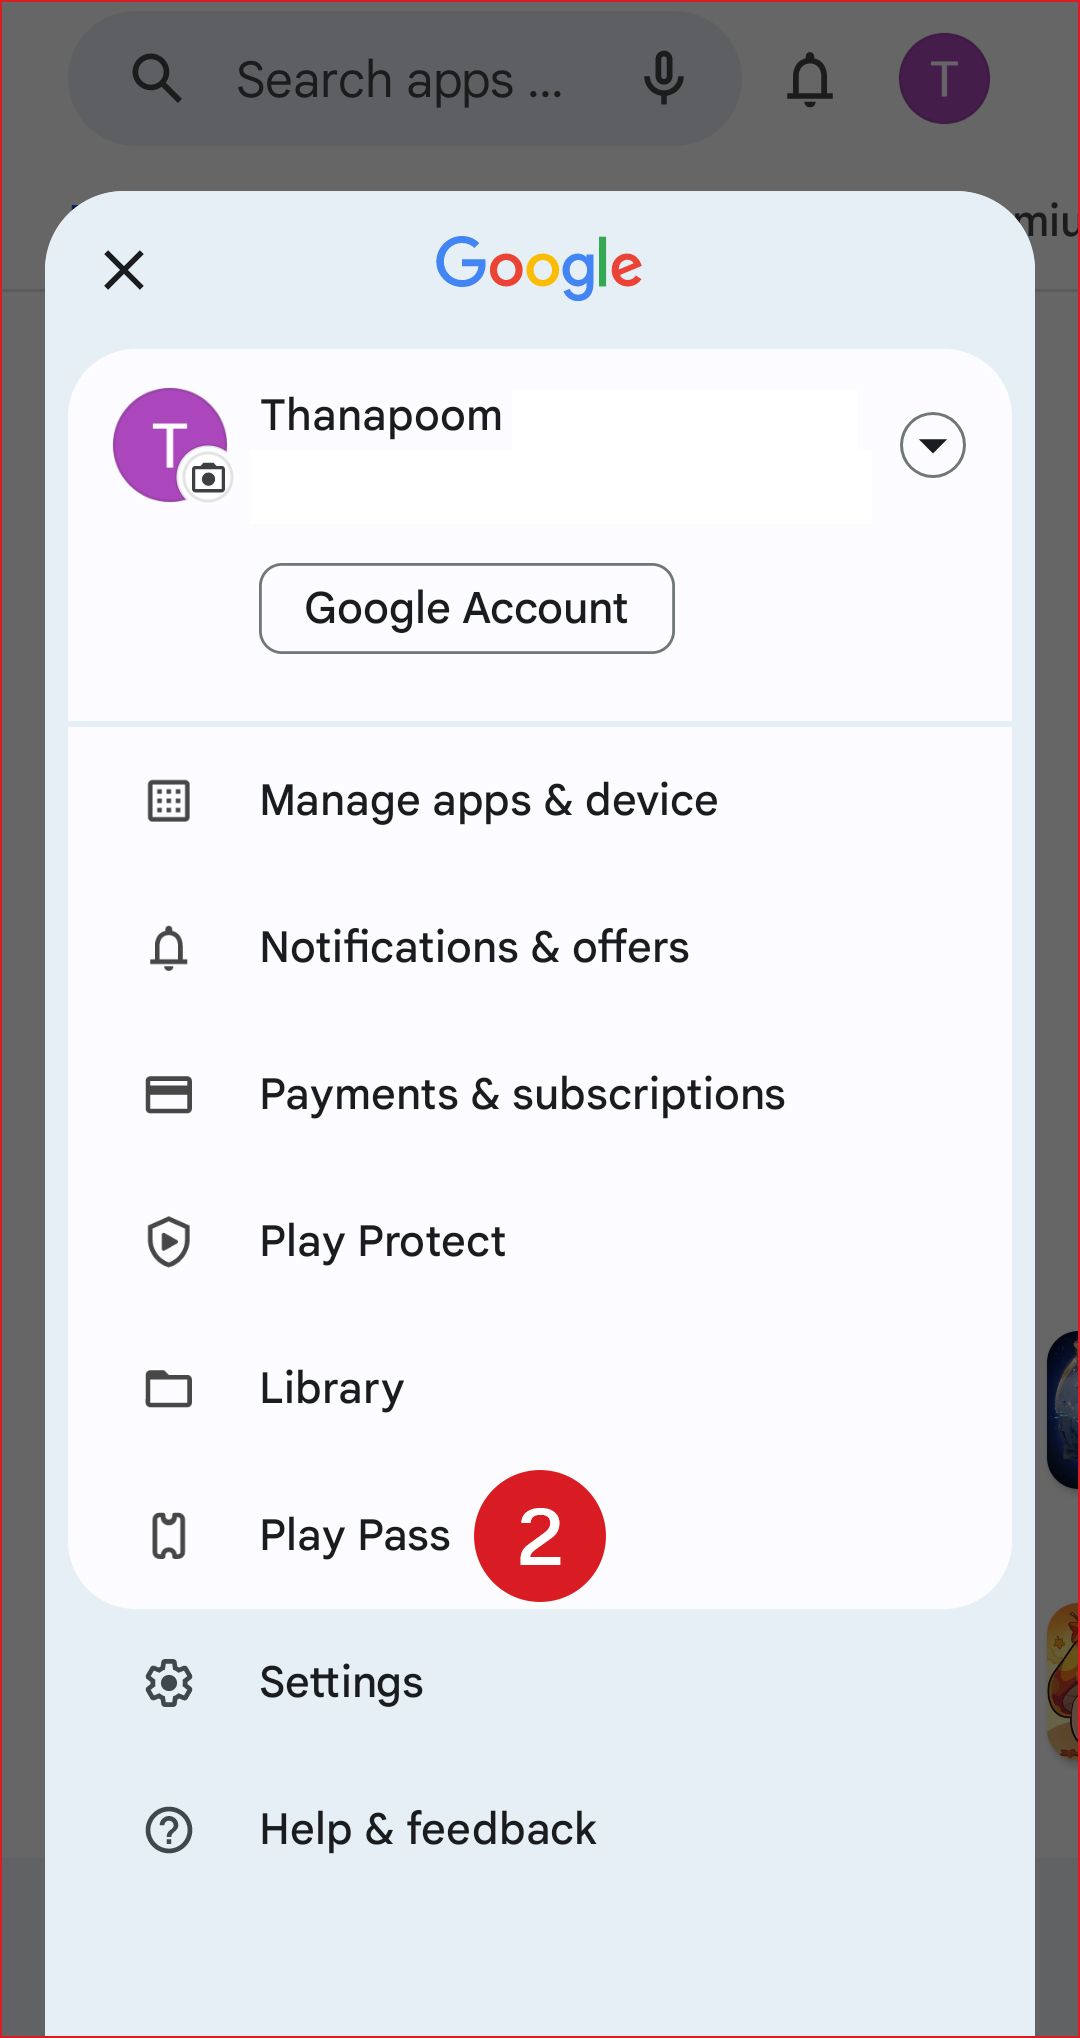 [How-To] วิธีสมัคร Google Play Pass ให้คุ้มที่สุด – จ่ายเดือนละ 10 บาท เล่นเกม ใช้แอป Android พรีเมียมไม่อั้น